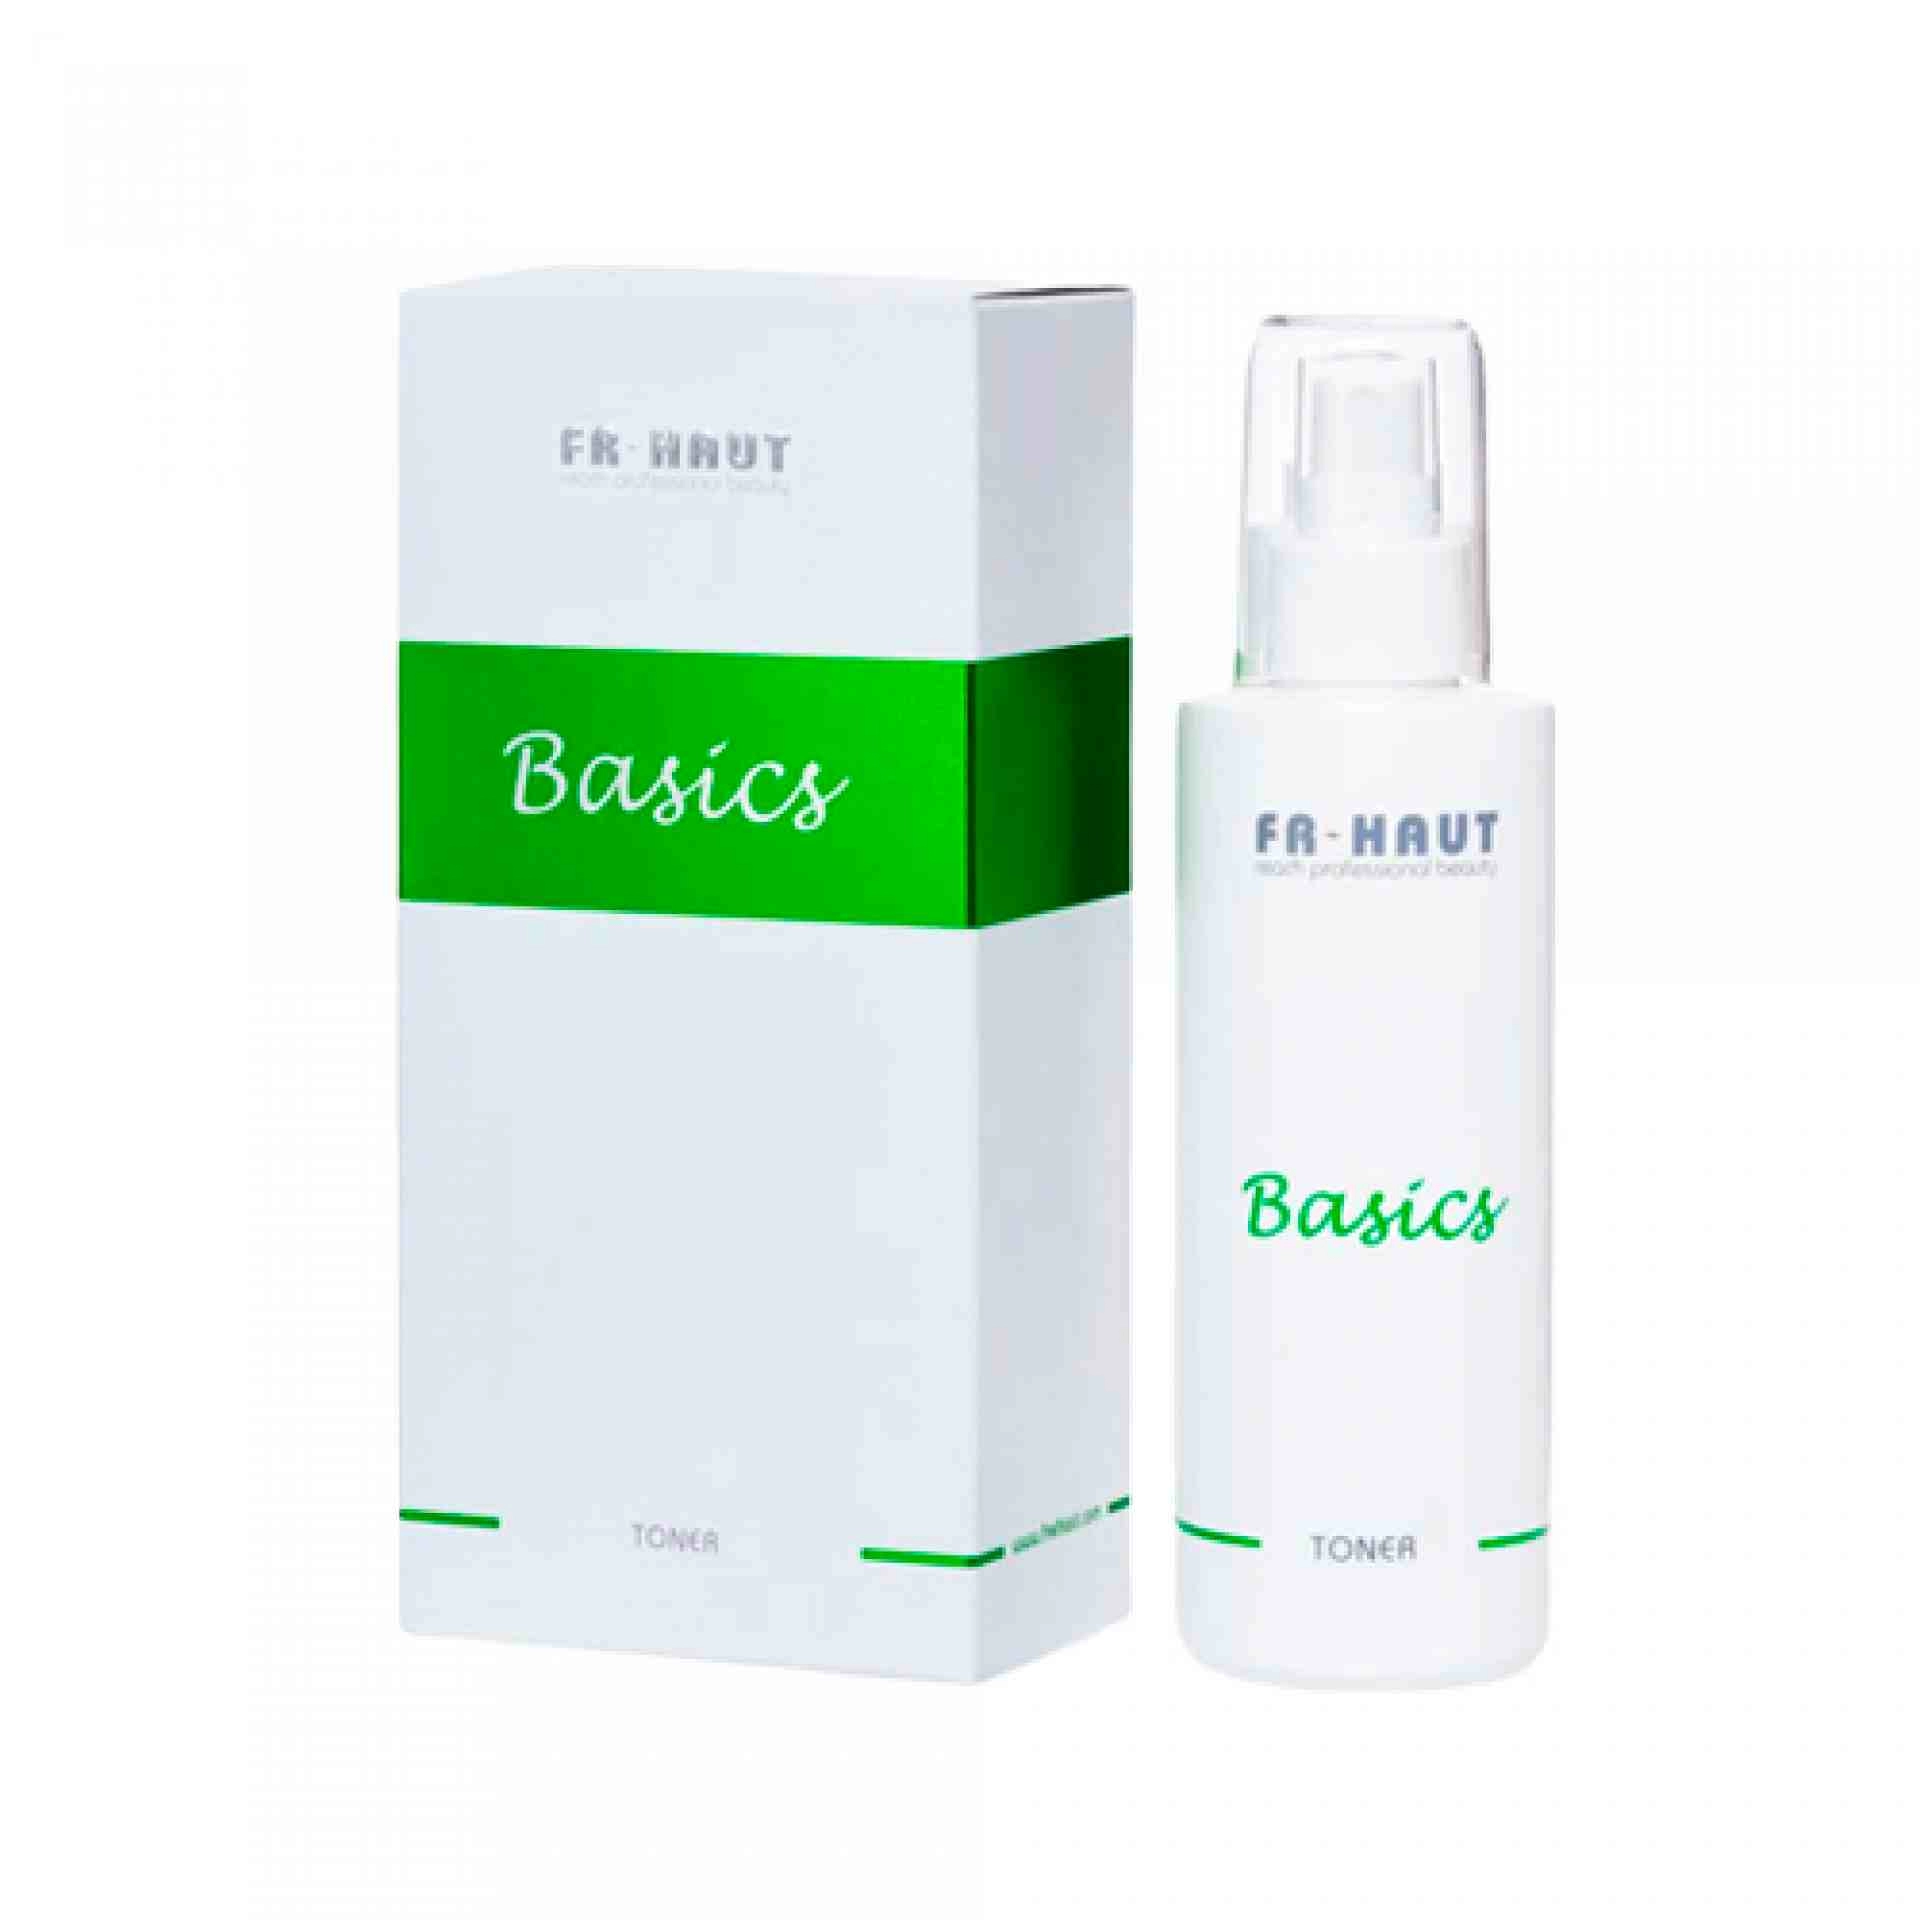 Basics Toner | Agua Facial - Basics - Freihaut ®